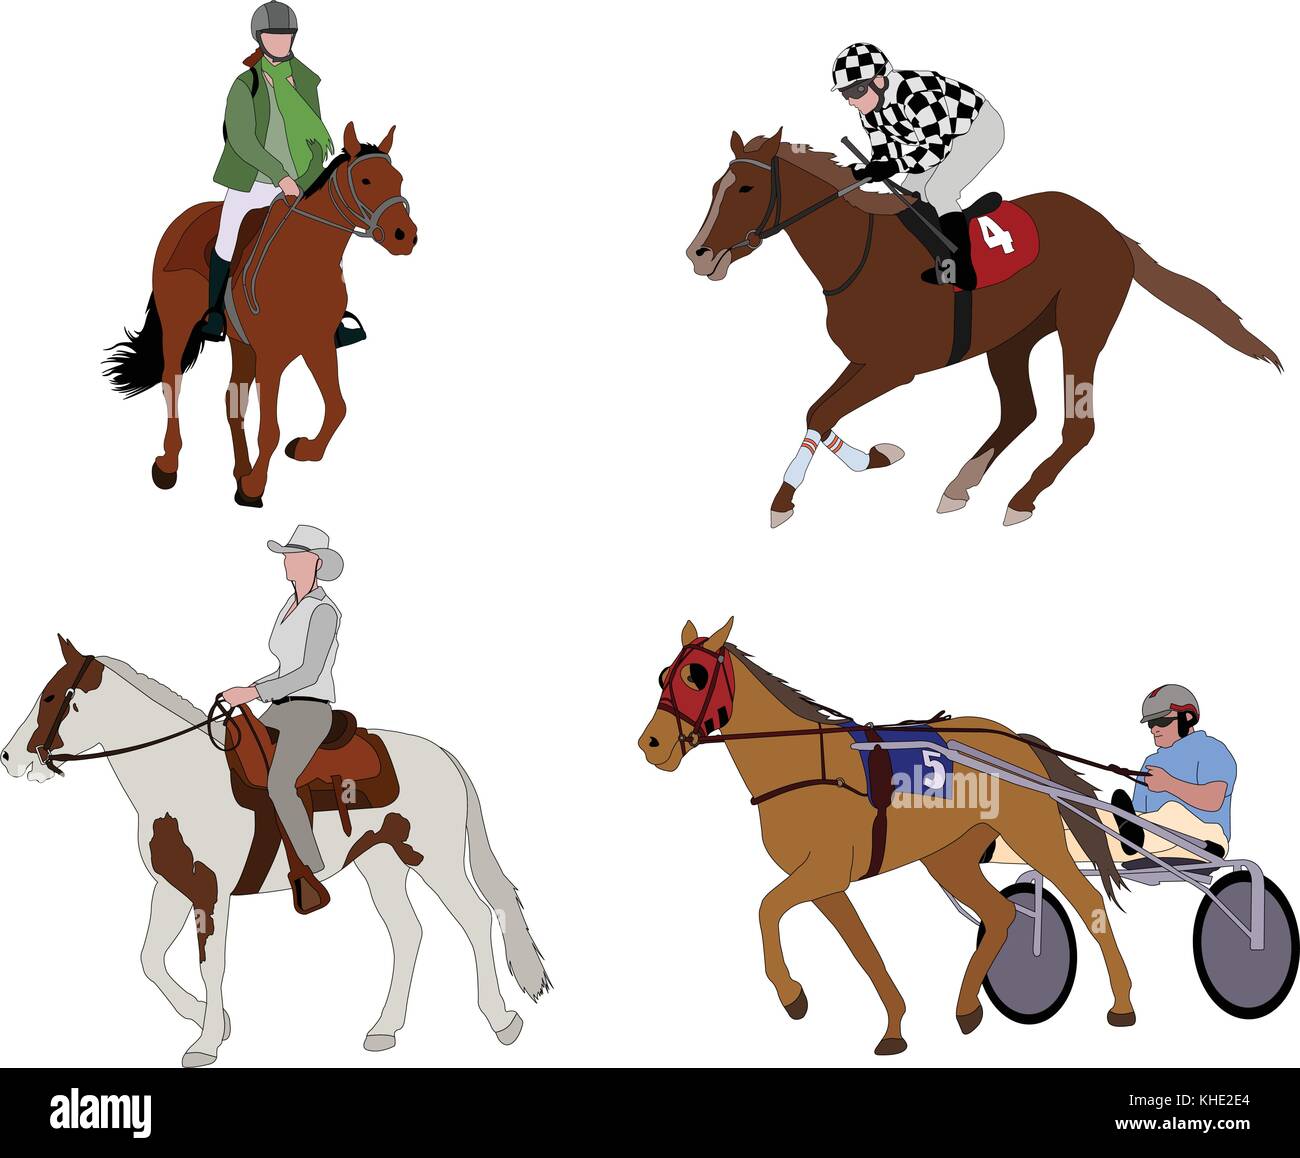 Menschen reiten pferde Abbildung Stock Vektor